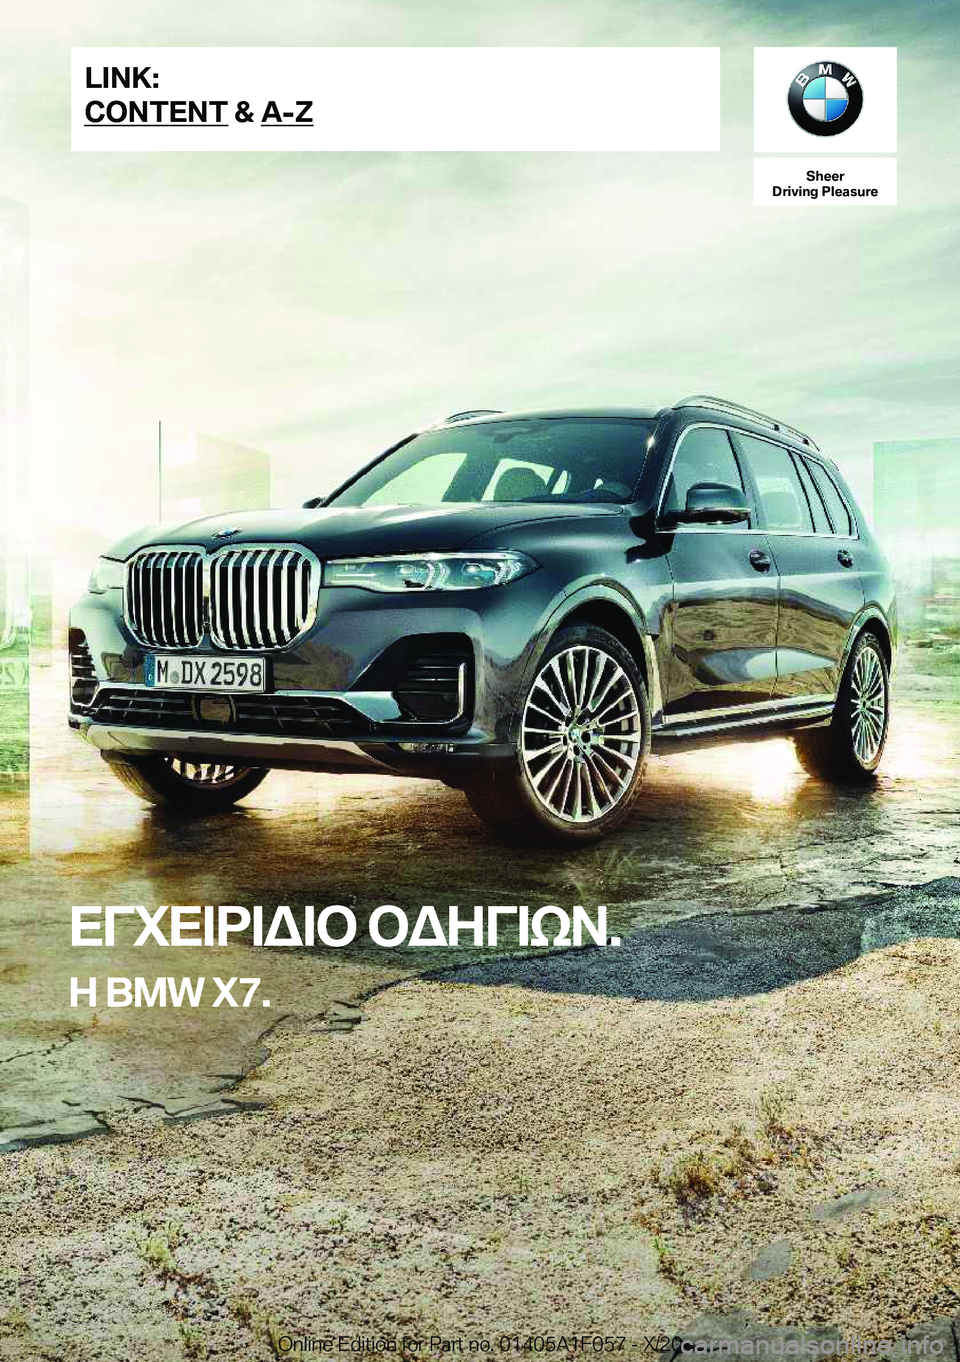 BMW X7 2021  ΟΔΗΓΌΣ ΧΡΉΣΗΣ (in Greek) �S�h�e�e�r
�D�r�i�v�i�n�g��P�l�e�a�s�u�r�e
XViX=d=W=b�bWZV=kA�.
�H��B�M�W��X�7�.�L�I�N�K�:
�C�O�N�T�E�N�T��&��A�-�Z�O�n�l�i�n�e��E�d�i�t�i�o�n��f�o�r��P�a�r�t��n�o�.��0�1�4